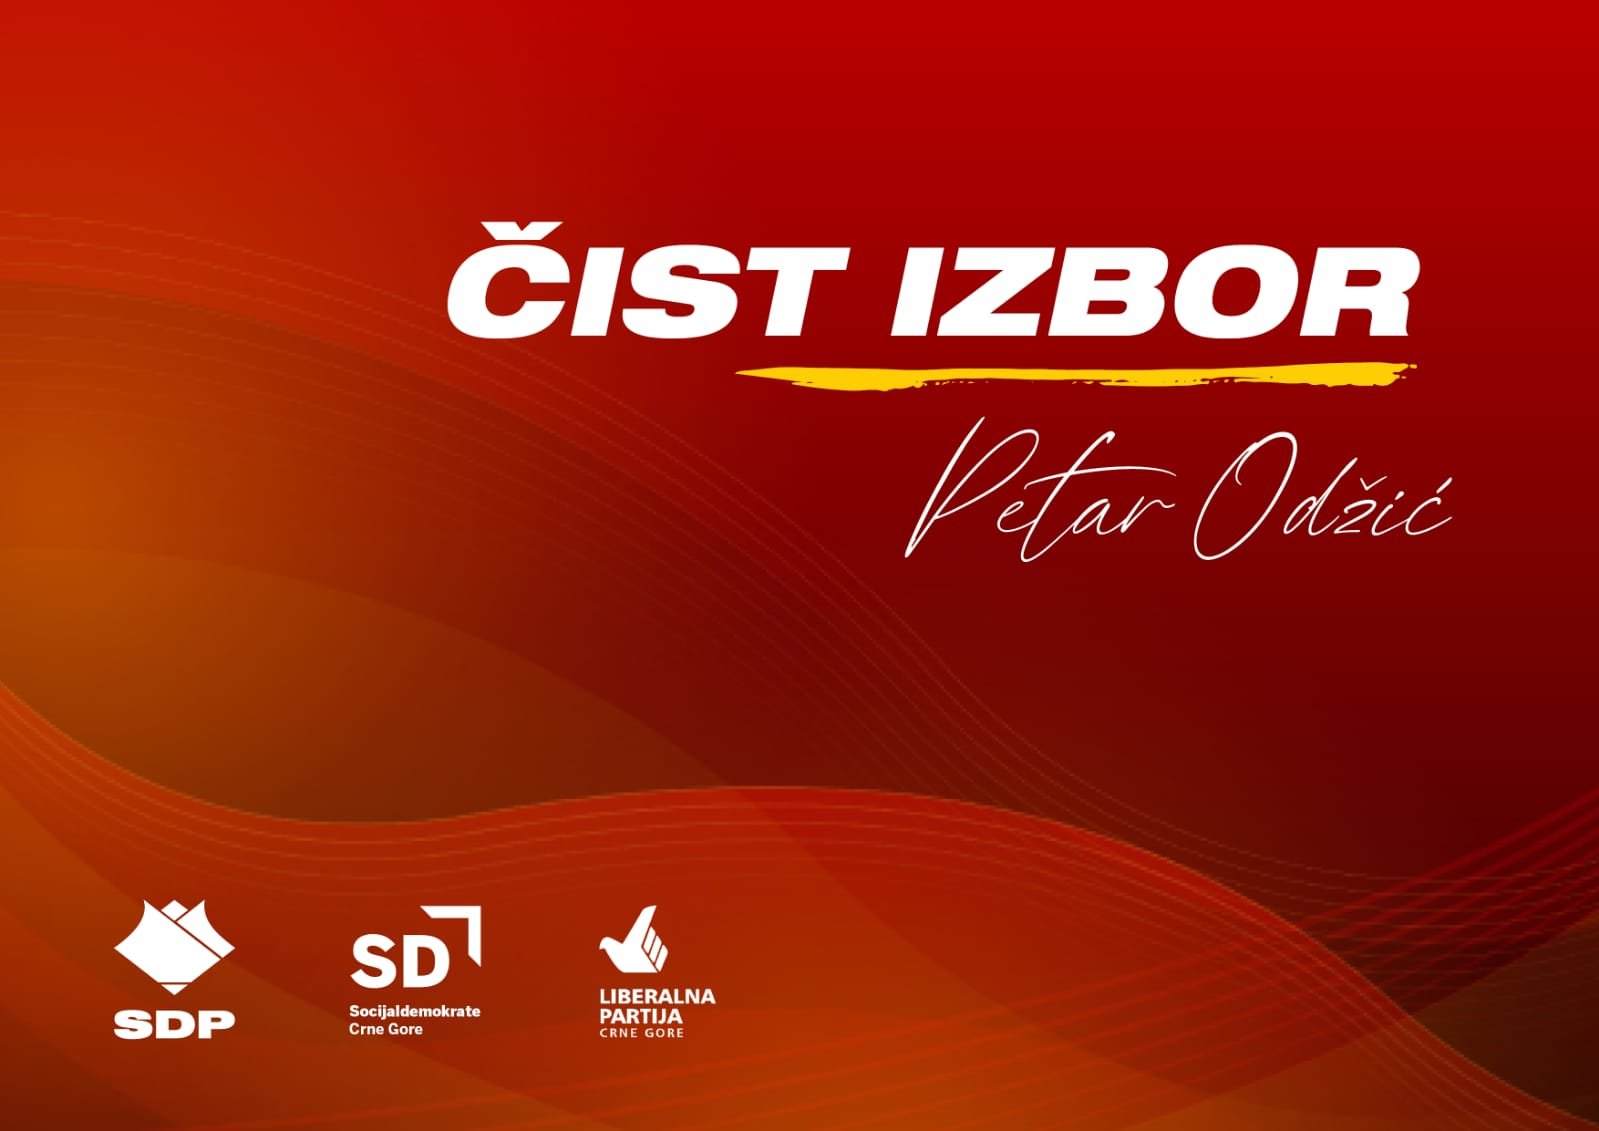 OIK Budvi prihvatila listu "Čist izbor - Petar Odžić - SDP, SD, LP i građani".